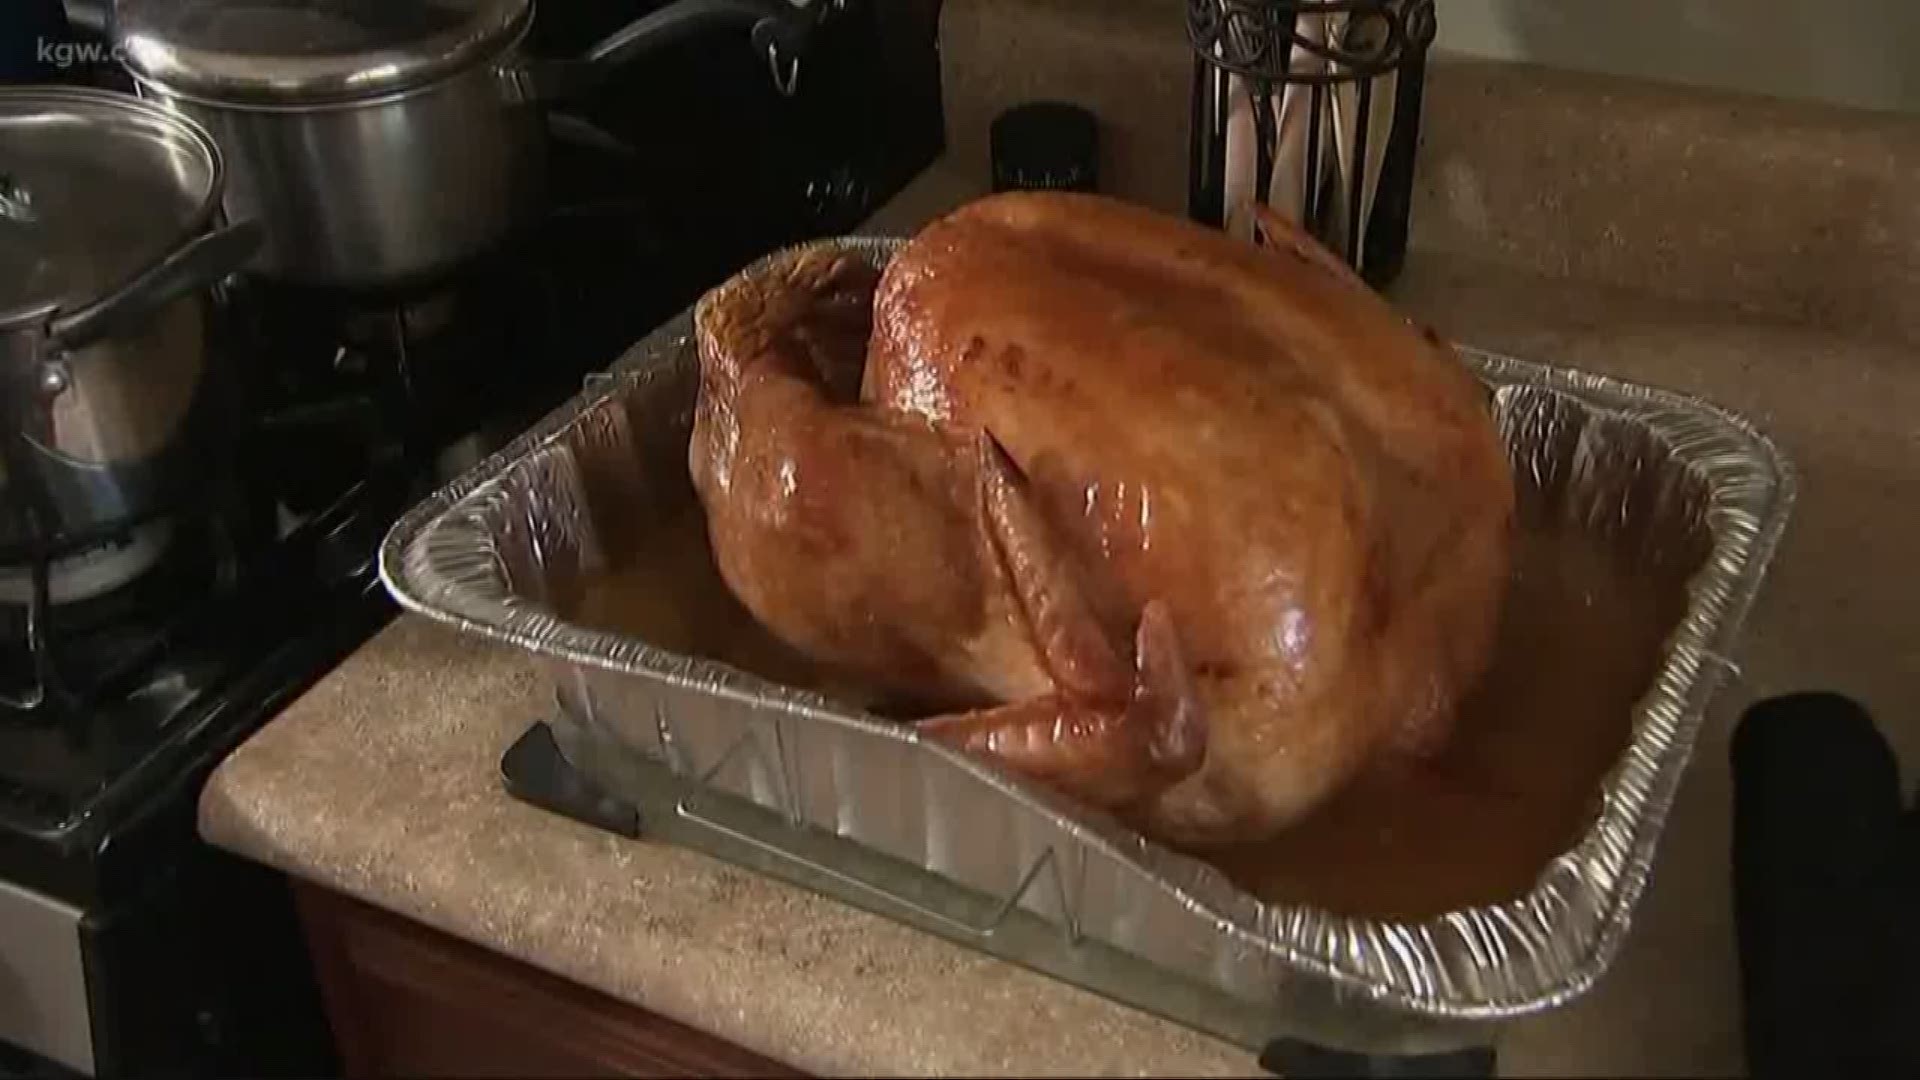 CDC warns about raw turkey salmonella risk